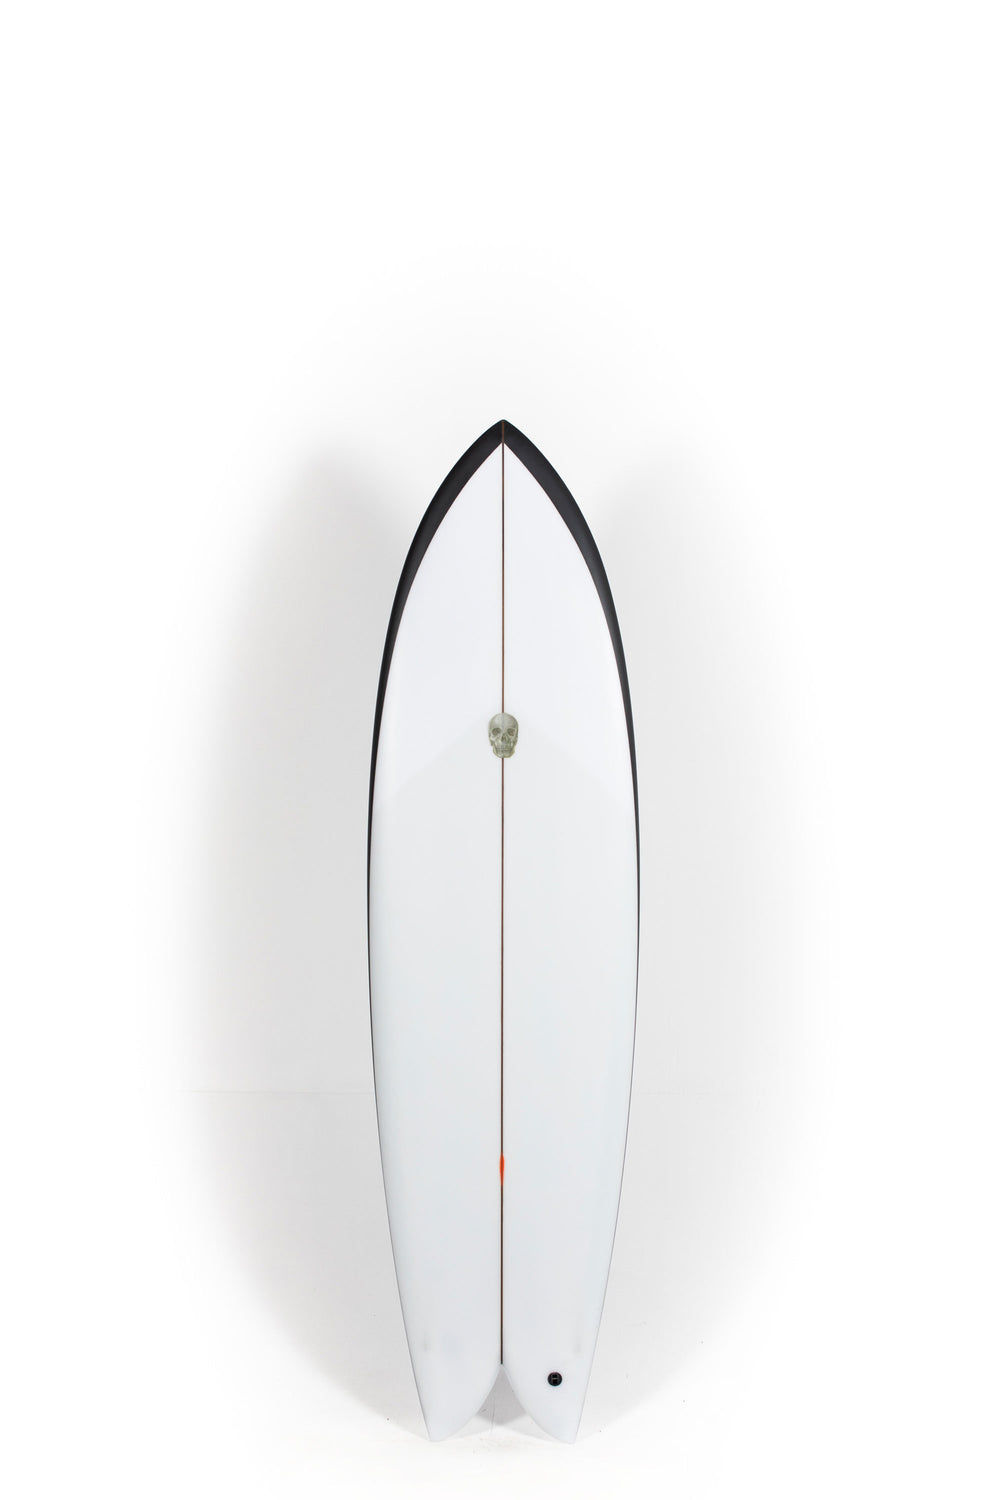 Pukas Surf shop - Christenson Surfboards - LONG PHISH - 6'4